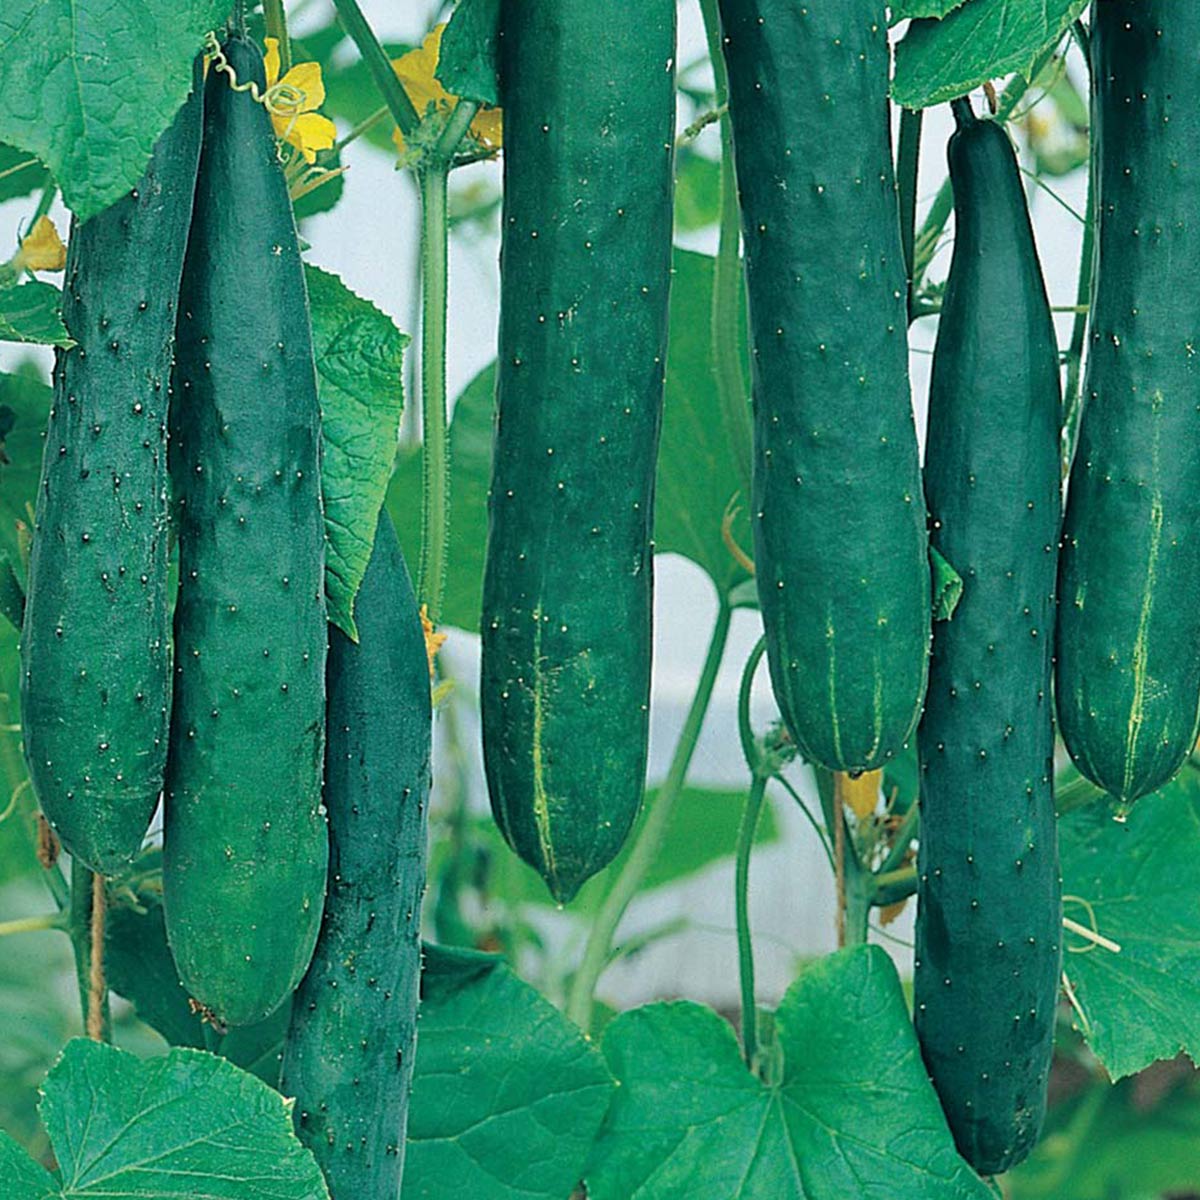 Wilko Cucumber Burpless Tasty Green F1 Seeds Image 2